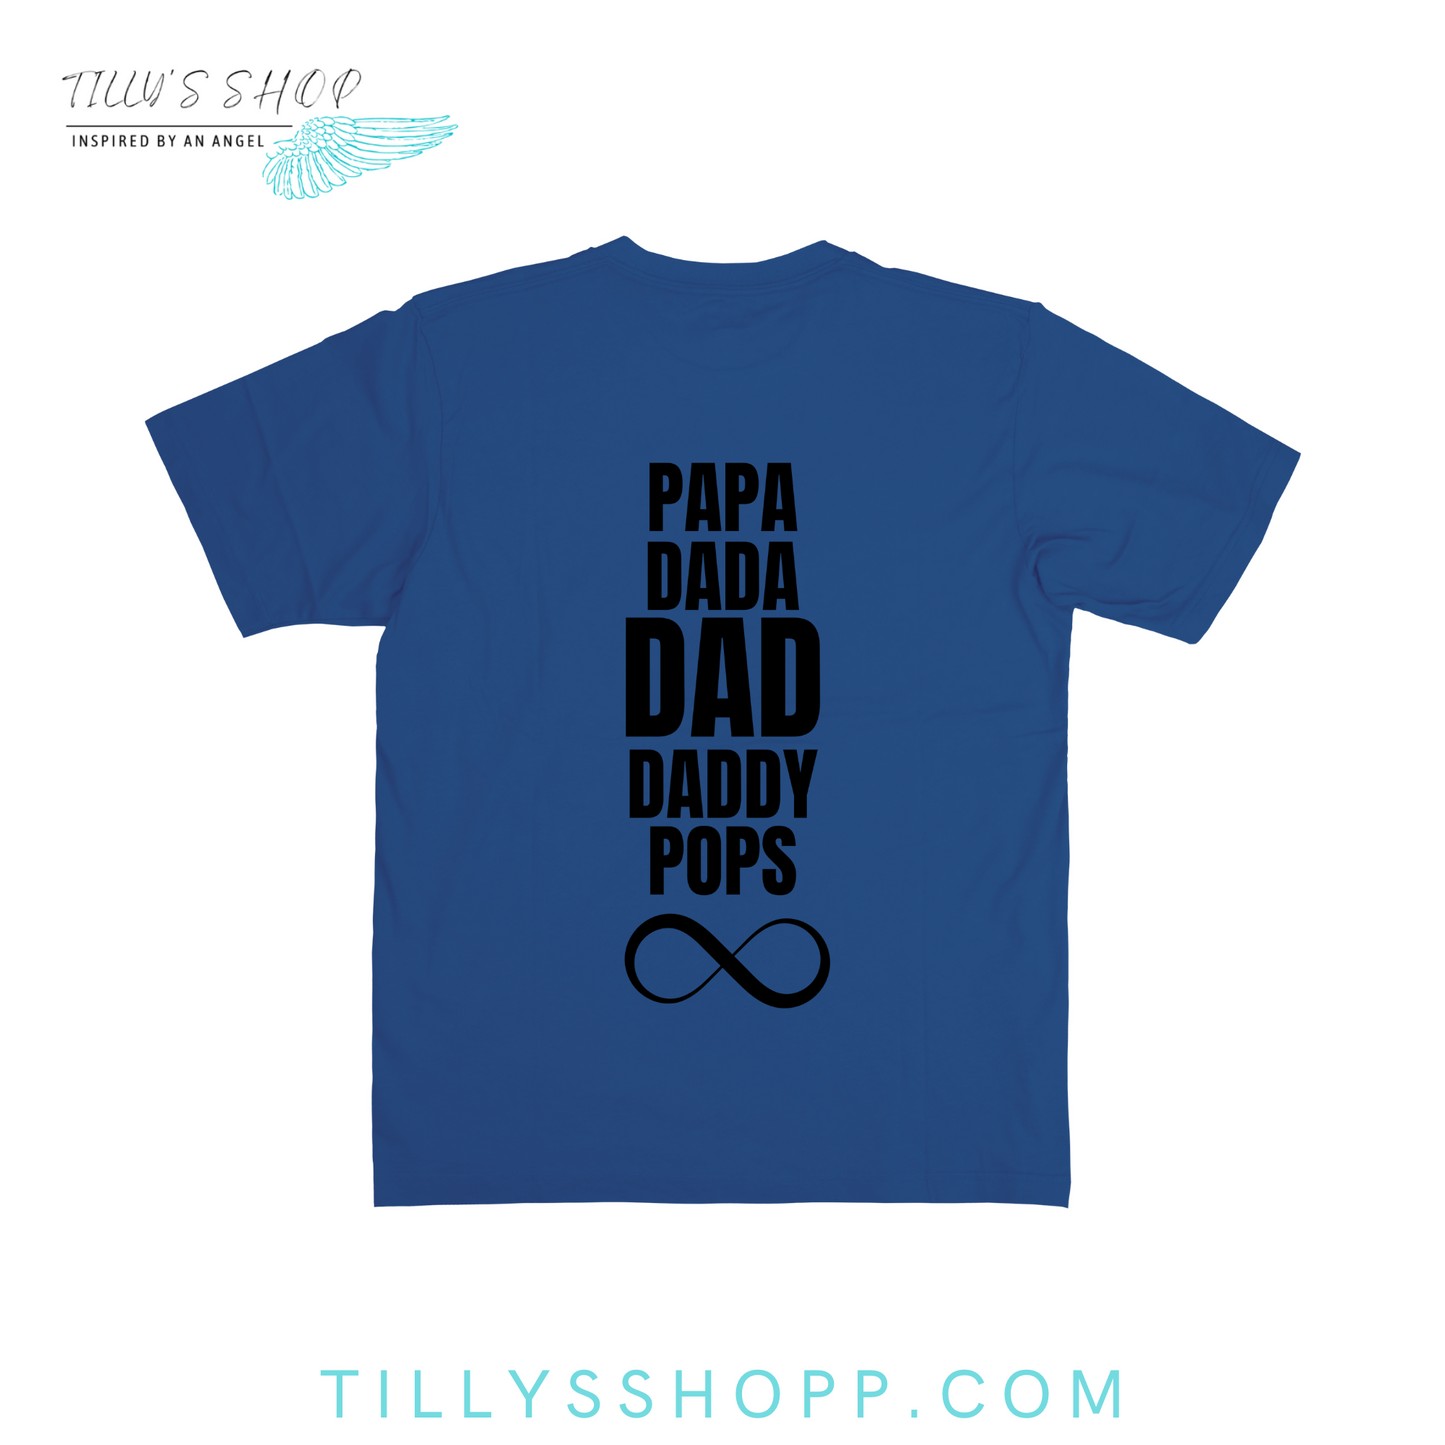 “Infinity DAD” T-Shirt